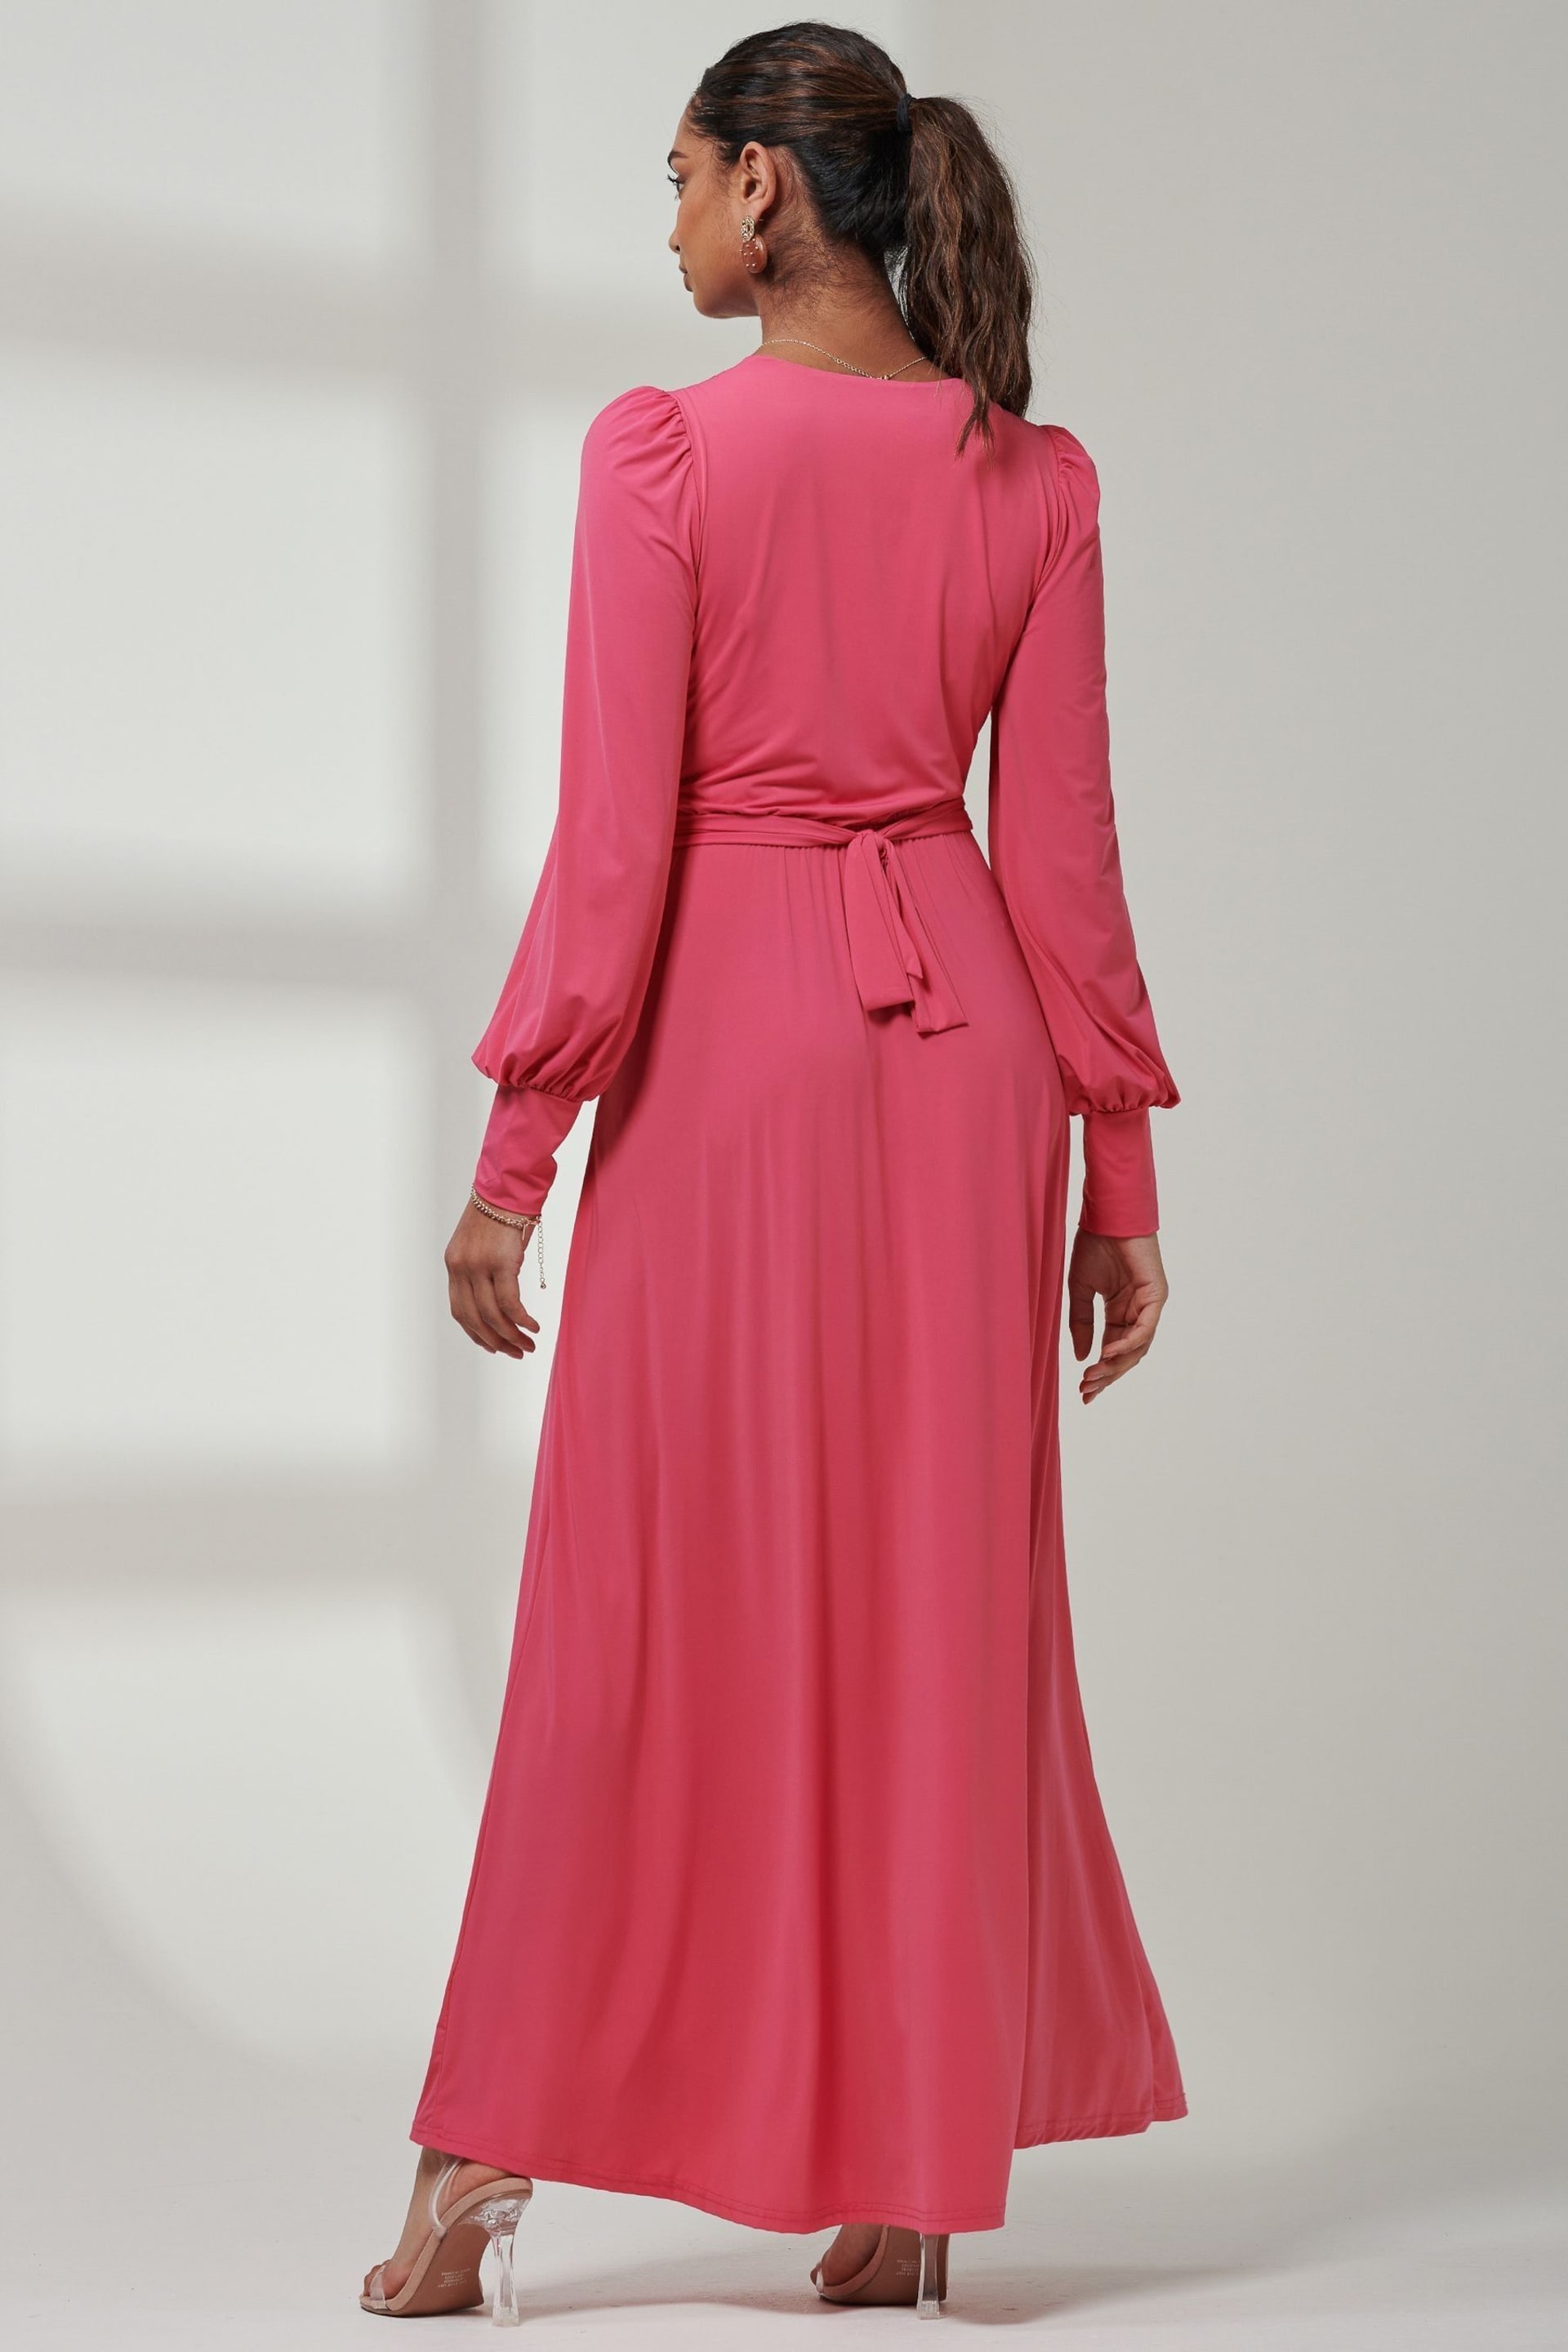 Jolie Moi Pink Giulia Long Sleeve Maxi Dress - Image 2 of 6